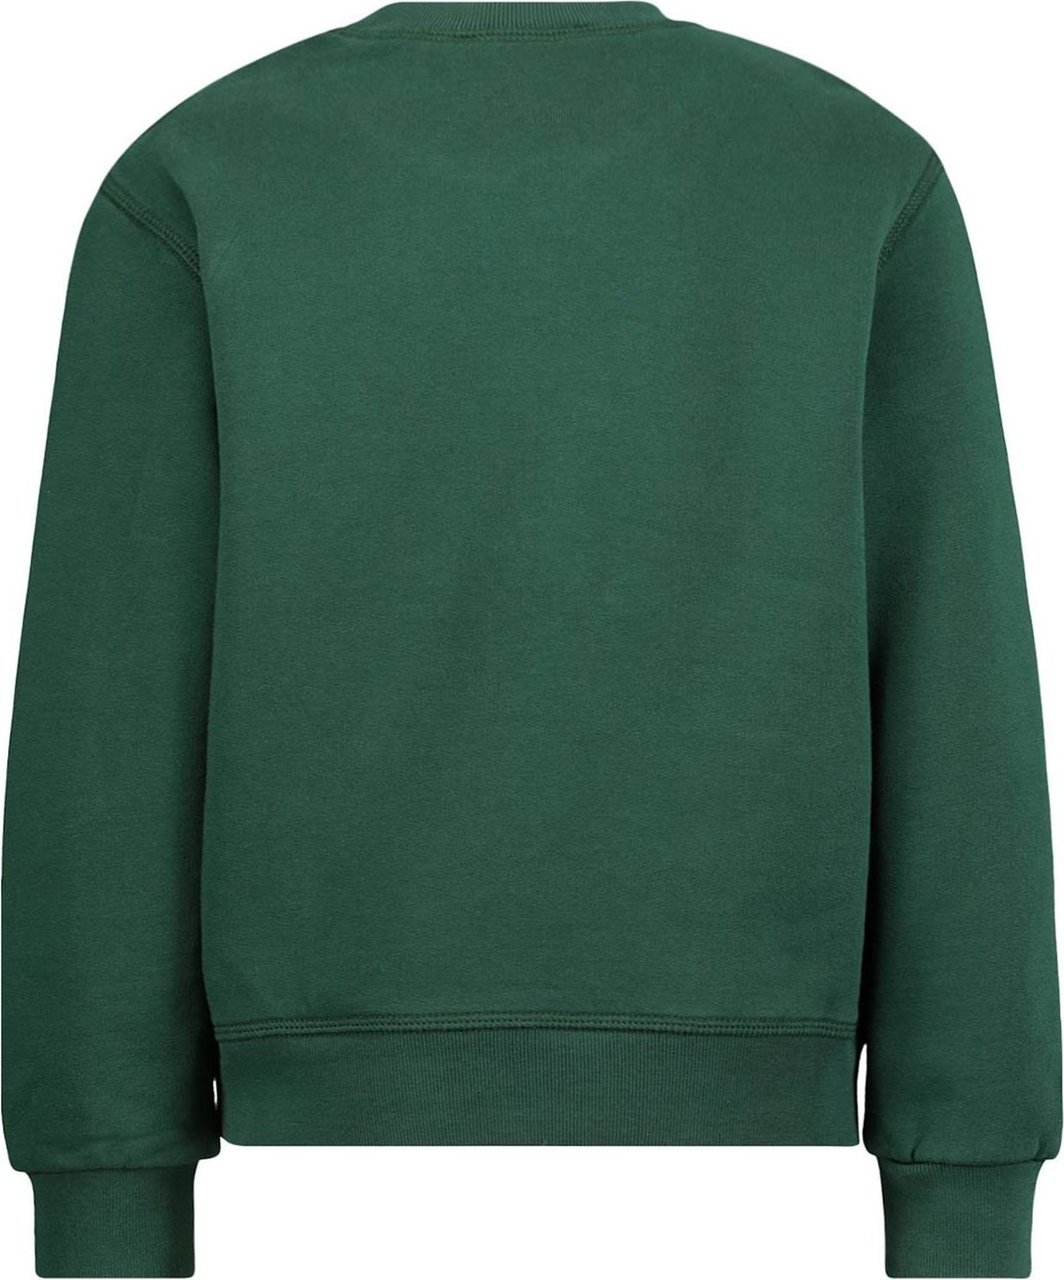 Dsquared2 Sweater logo Groen Groen